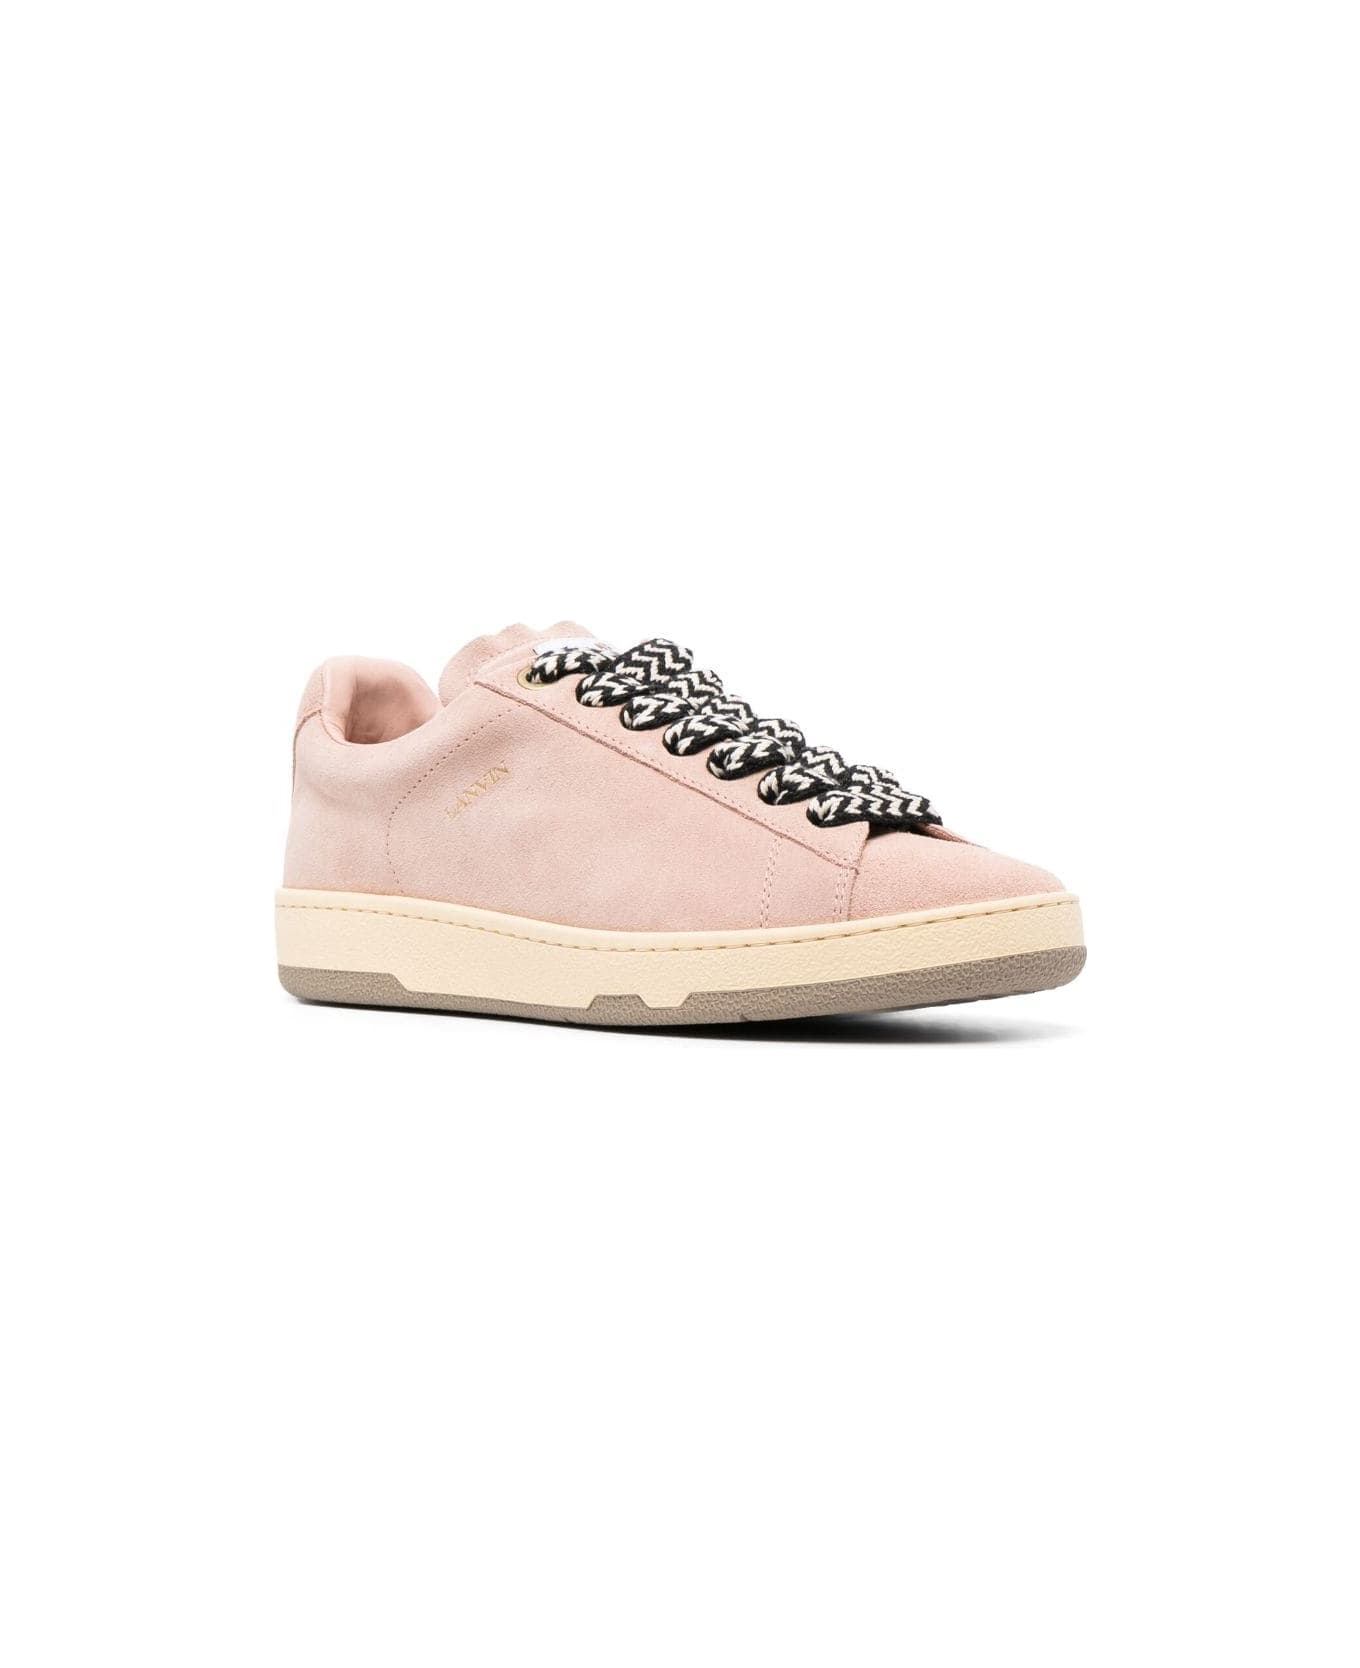 Lanvin Lite Curb Low Top Sneakers - Pale Pink